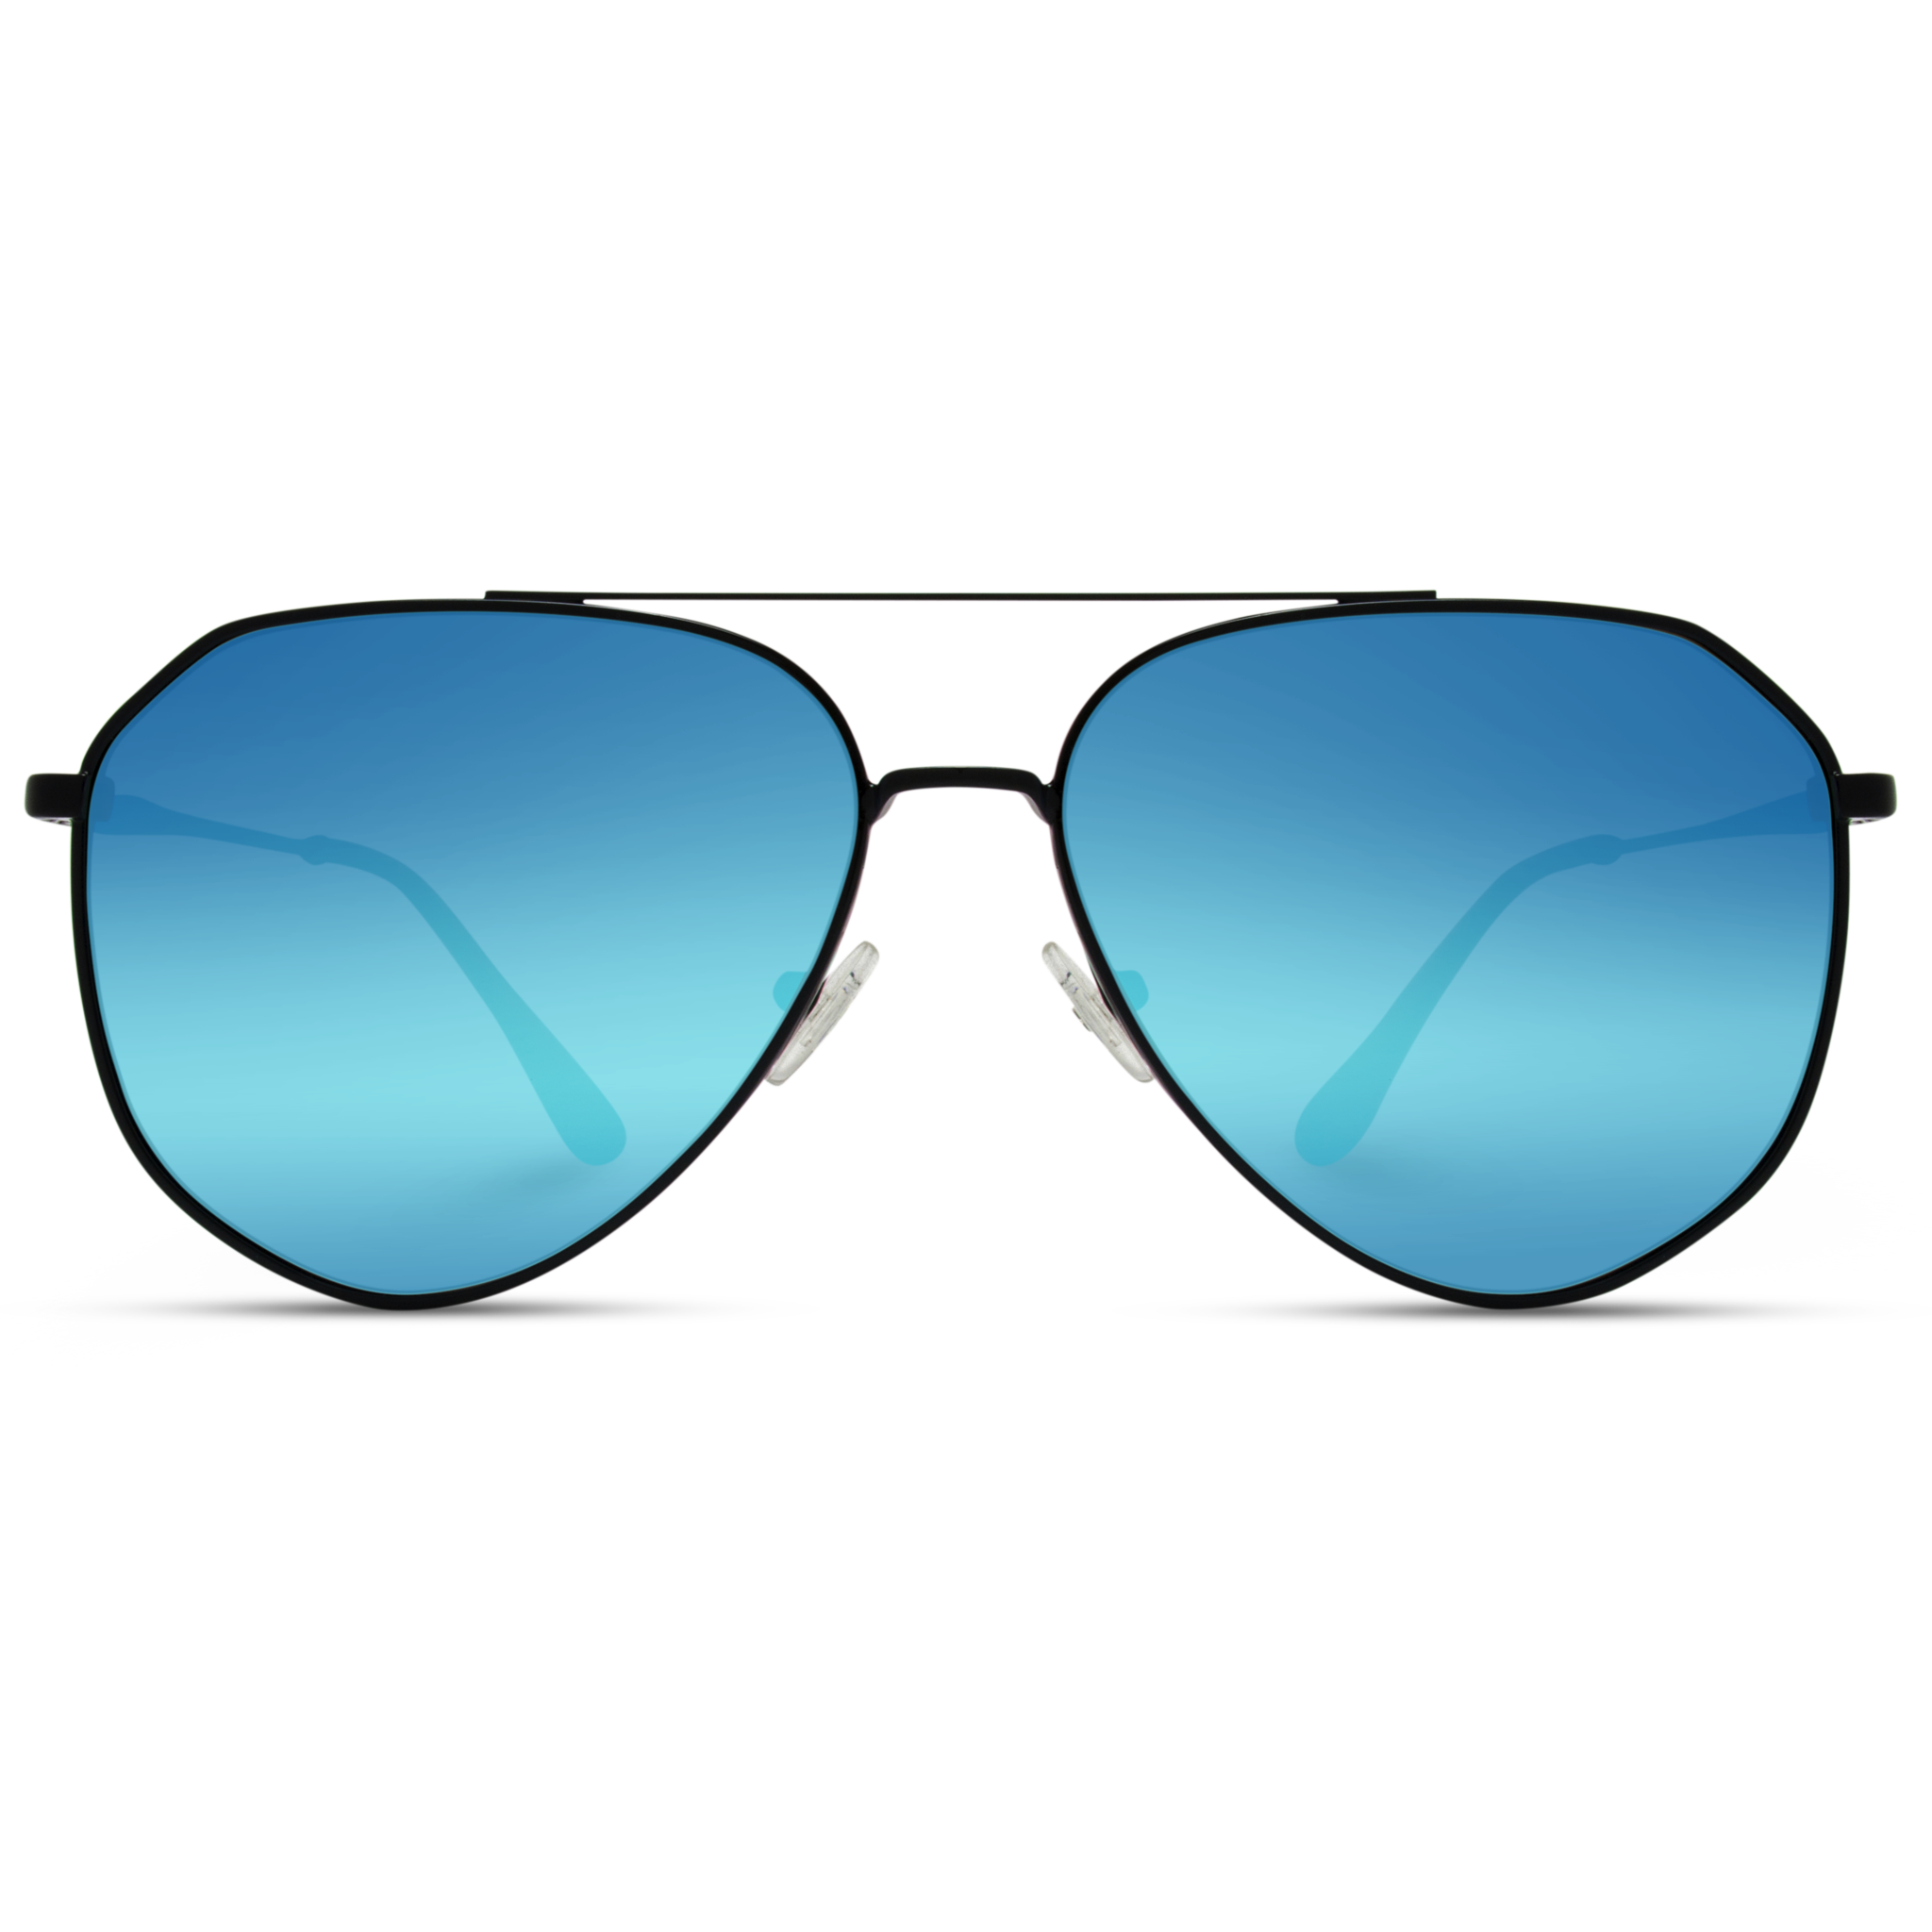 Sunglasses Frame Background PNG Image